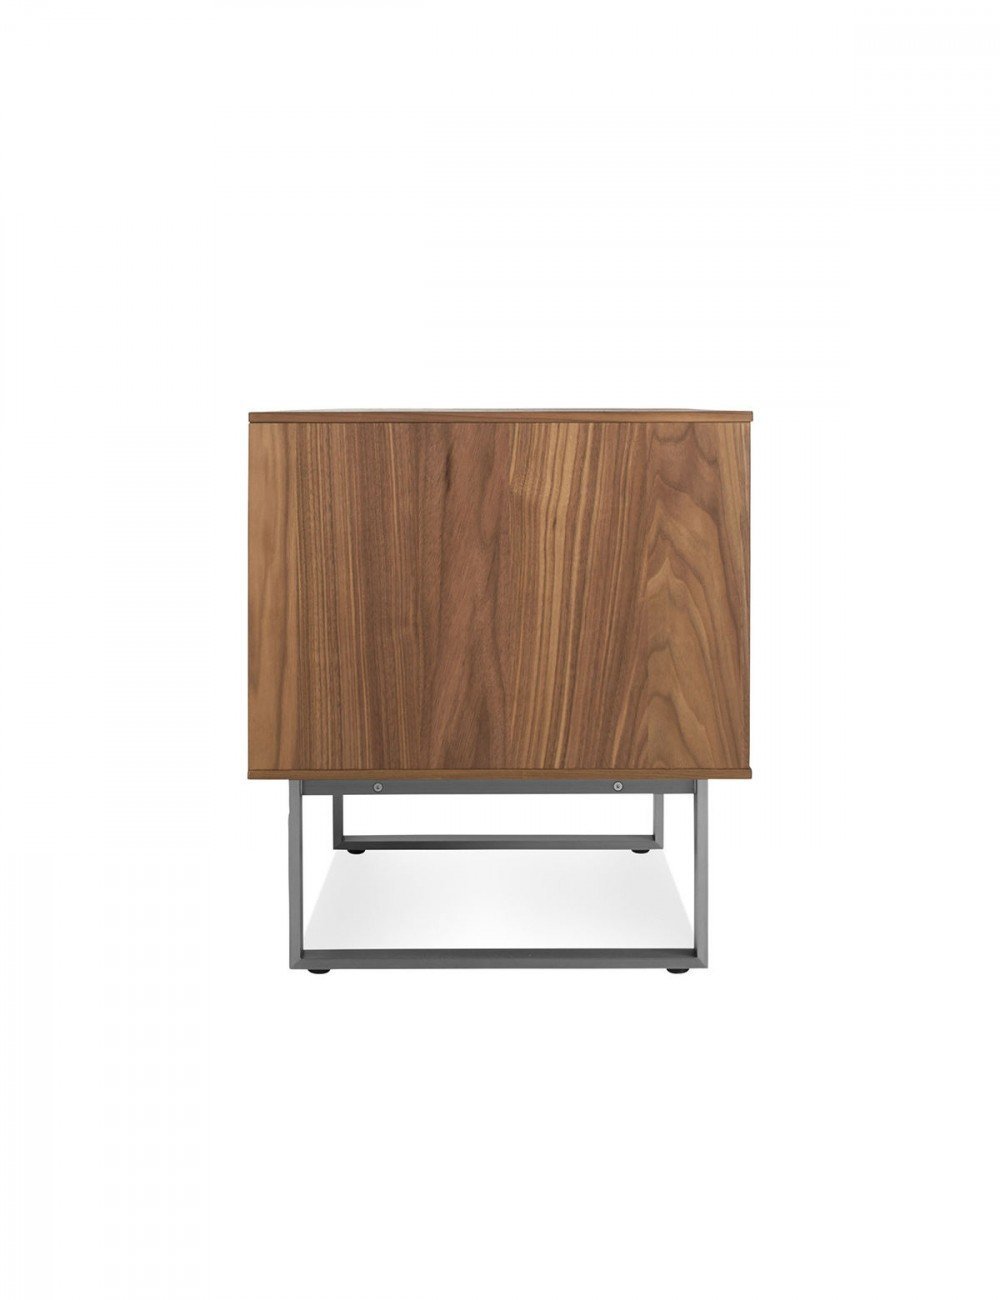 Modern EDF wood beside cabinet multifunctional bed side storage furniture wood